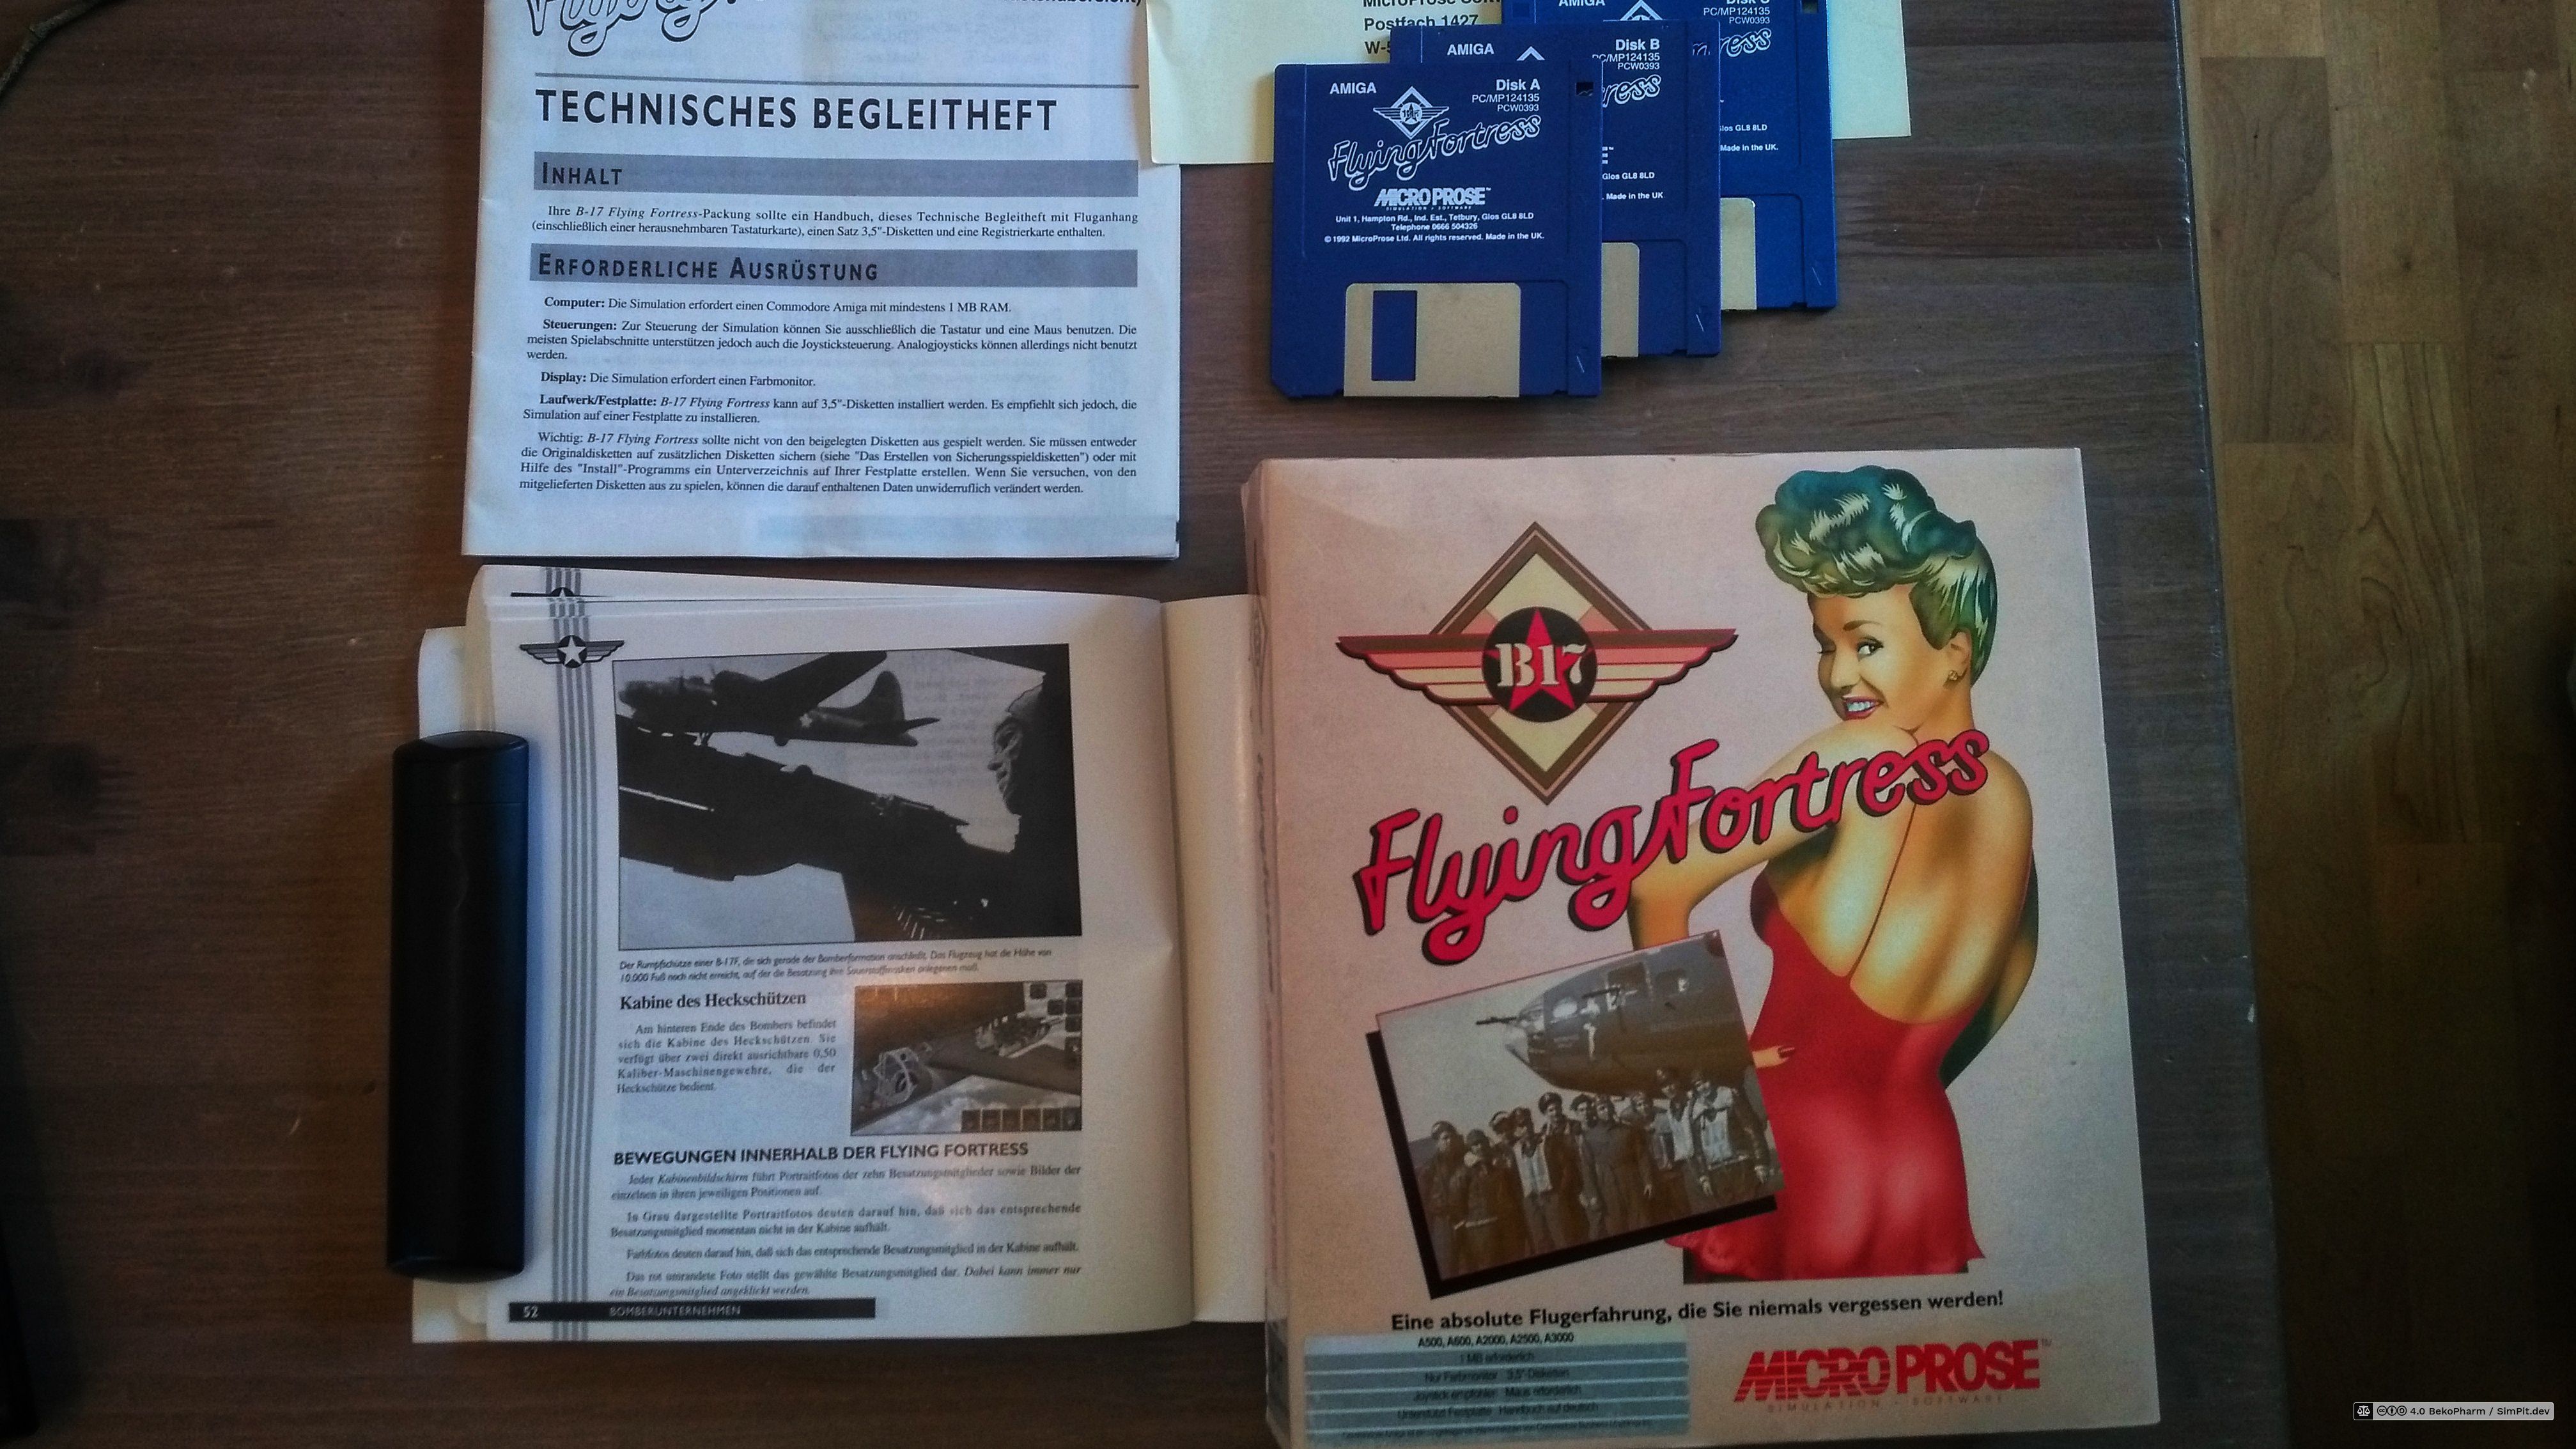 B-17 Flying Fortress Amiga edition